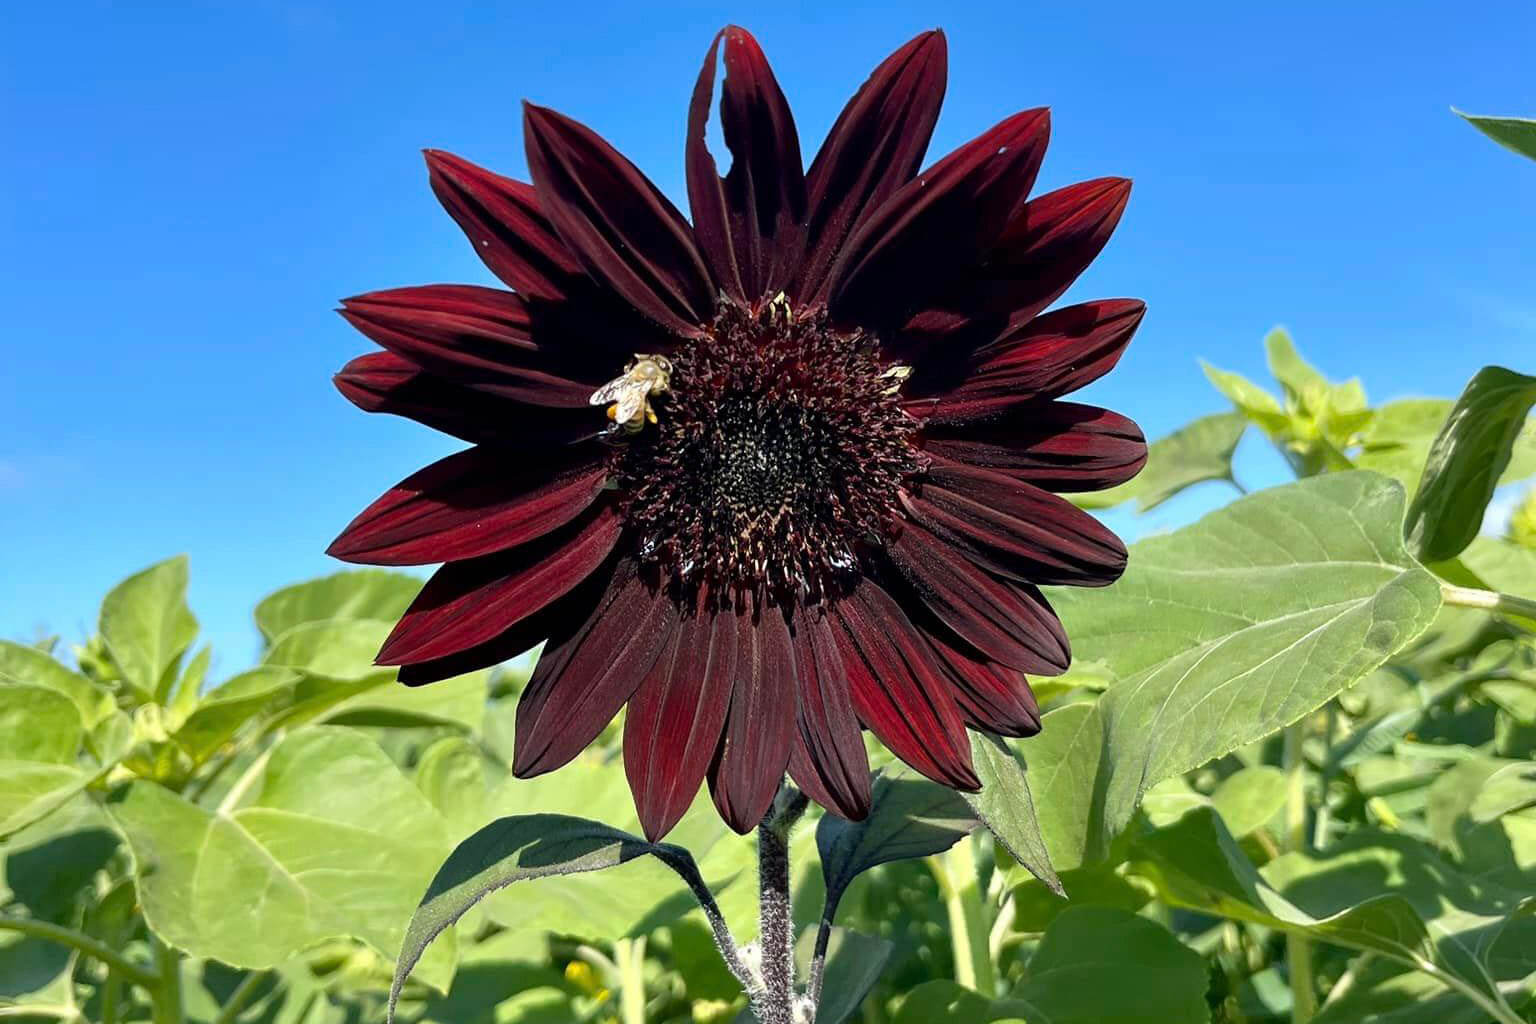 Sledds U Pick Farm Dark Colored Sunflower